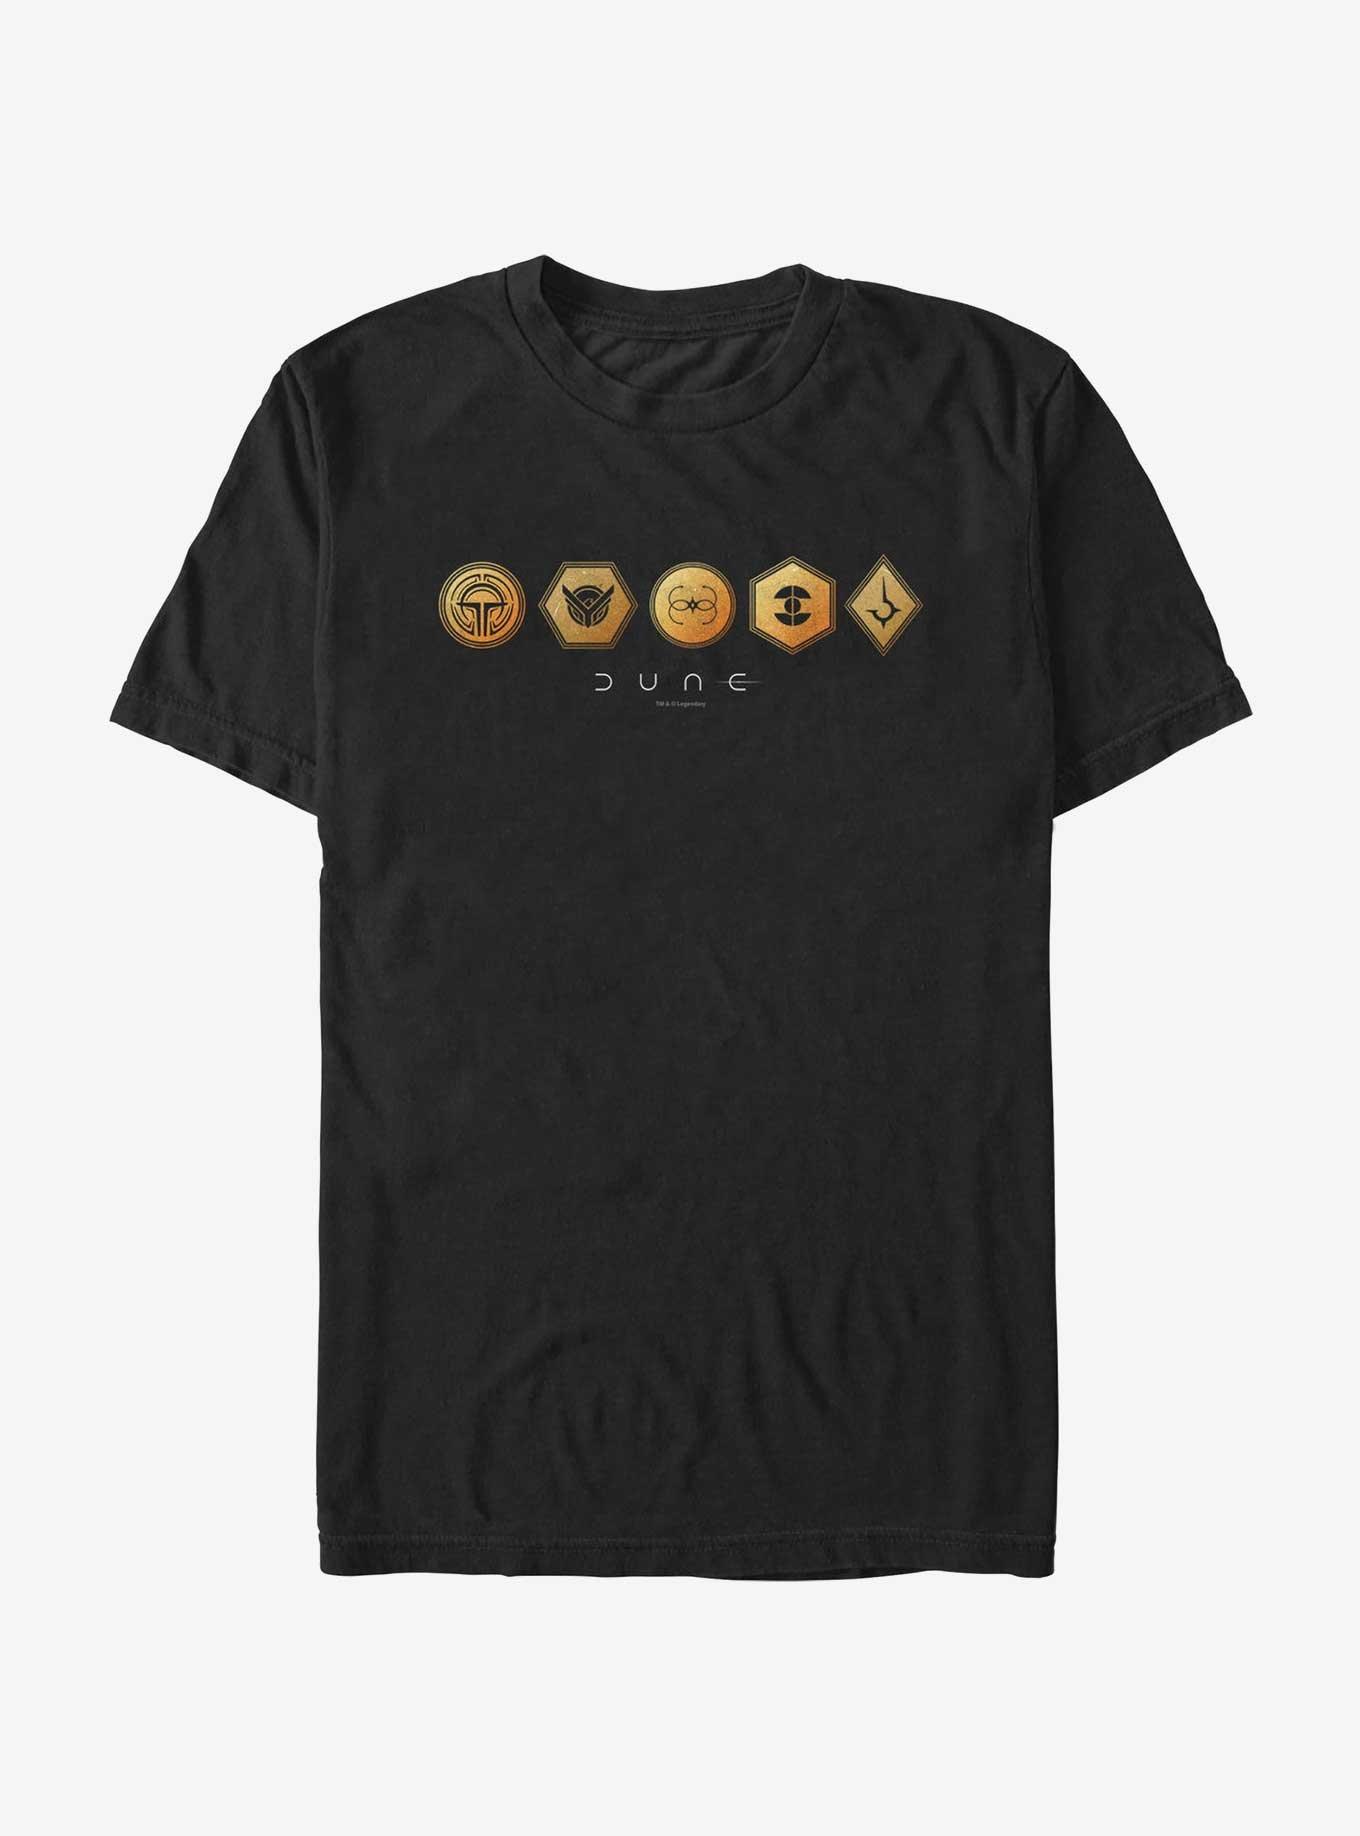 Dune: Part Two Emblems T-Shirt